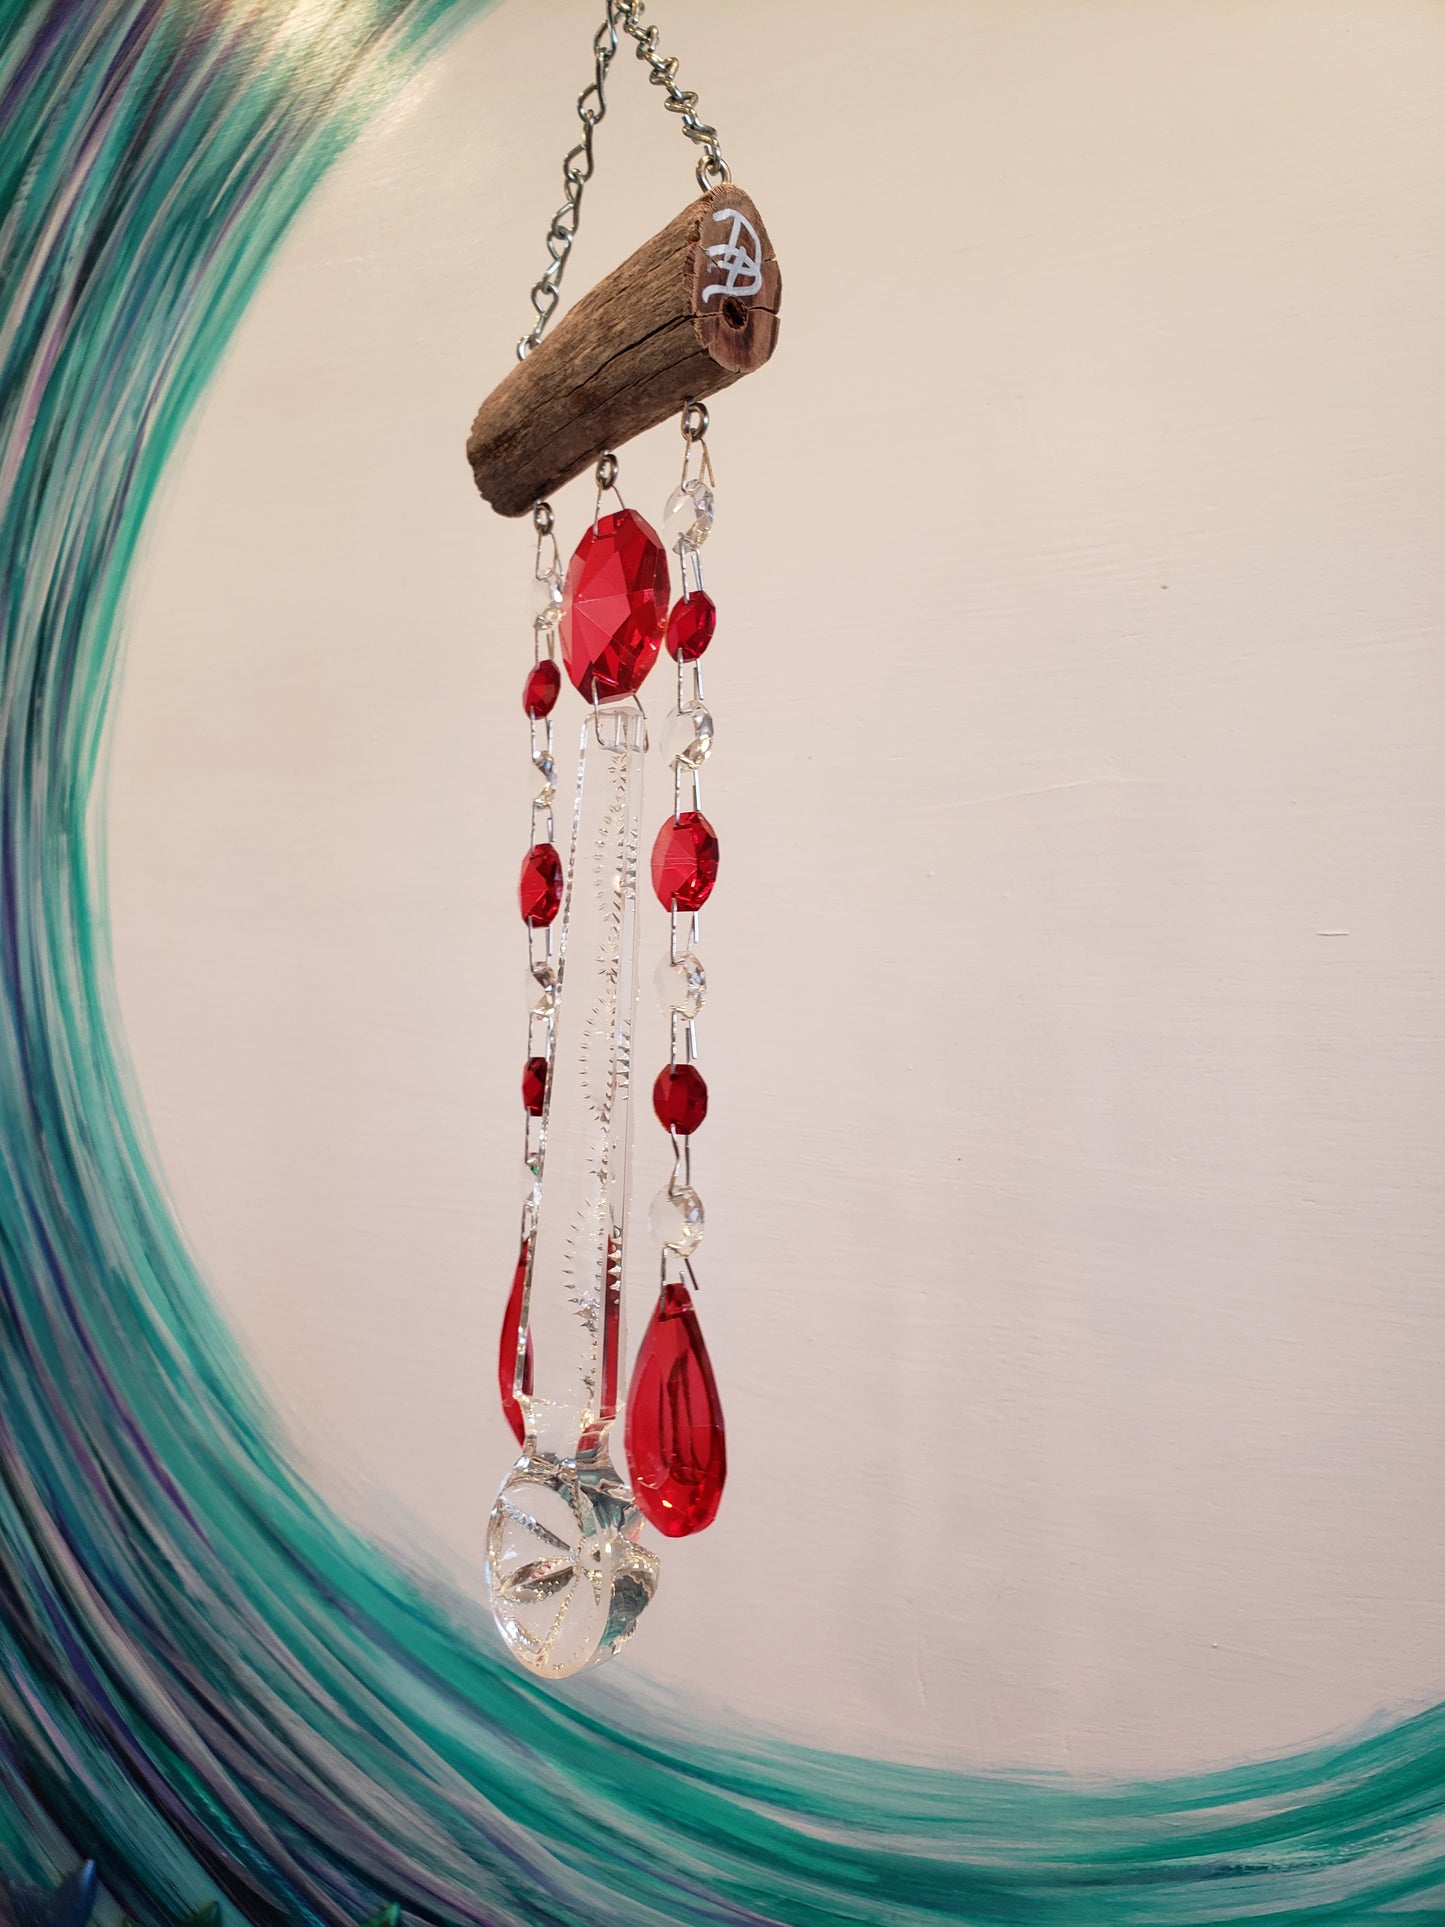 Unique art handmade crystal windchime suncatchers by Dazzling Driftwood